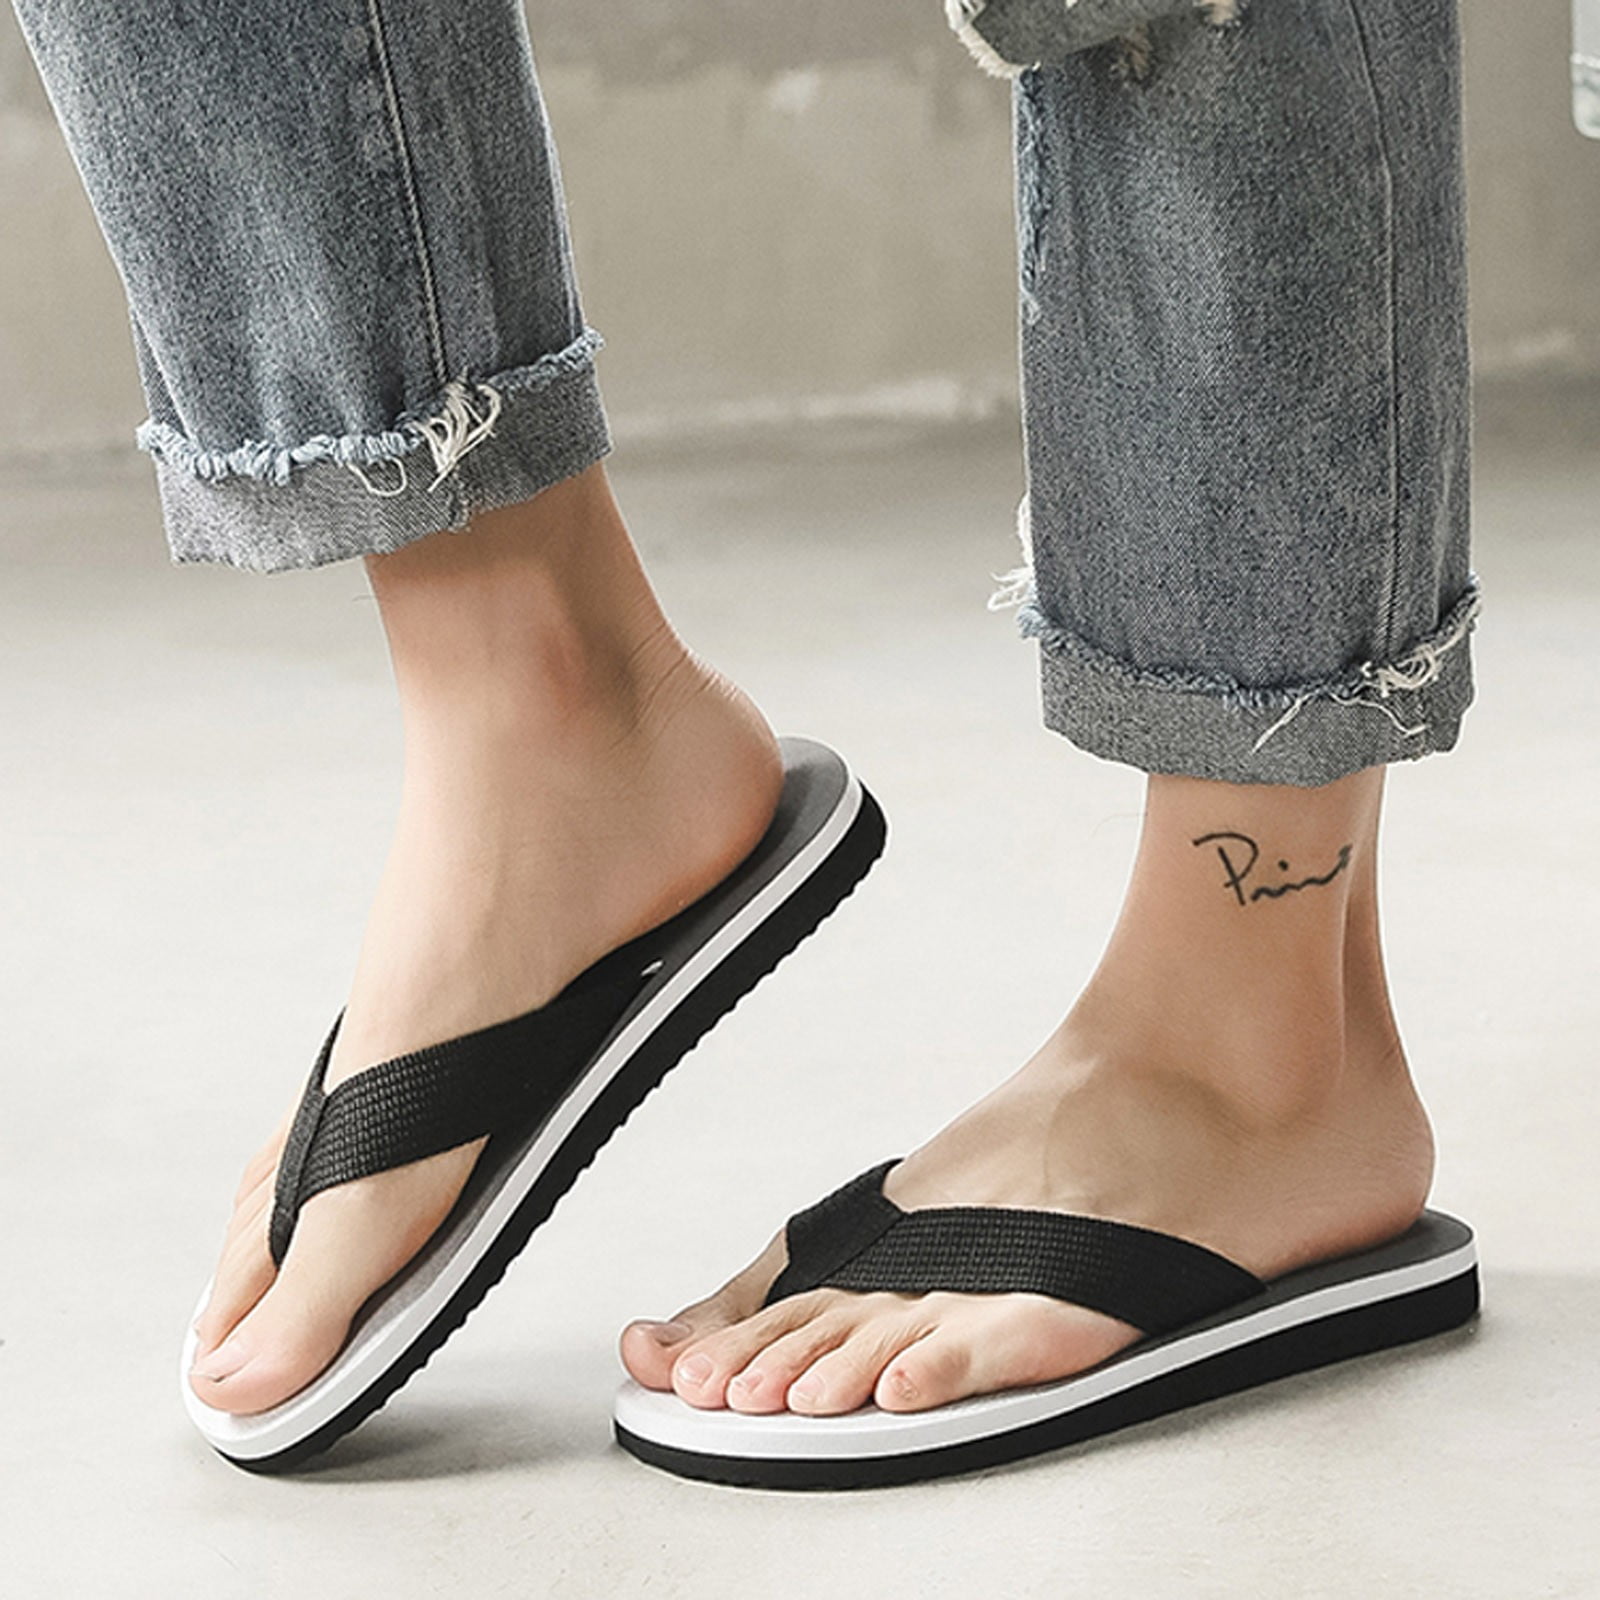 Mens Summer Slip On Beach Summer Holiday Clogs Sandal Flip Flop Shoes Size 6-12 